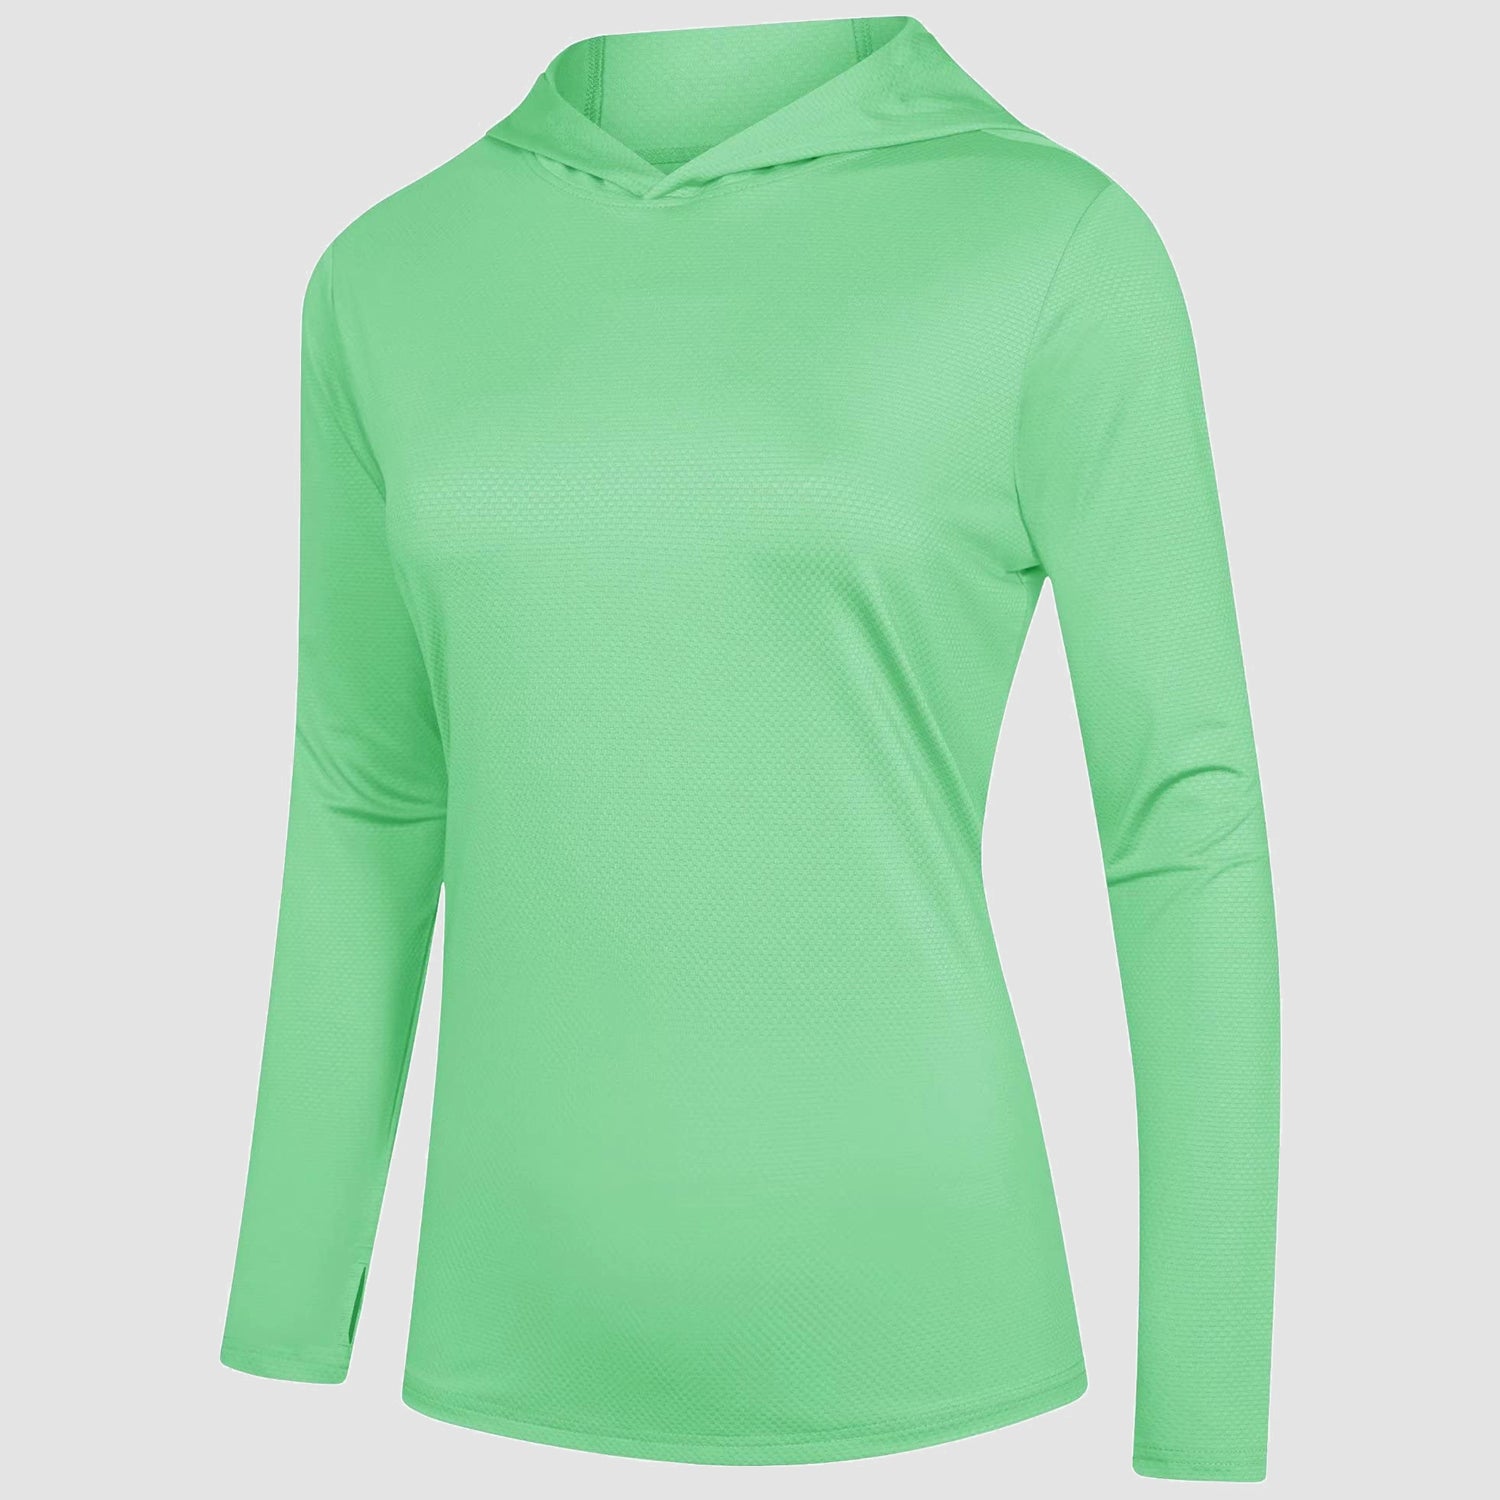 Women's Hoodie Shirts UPF 50+ Sun Protection Long Sleeve UV Shirt Fishing Hiking Athletic Shirts with Thumb Hole, Mint / S